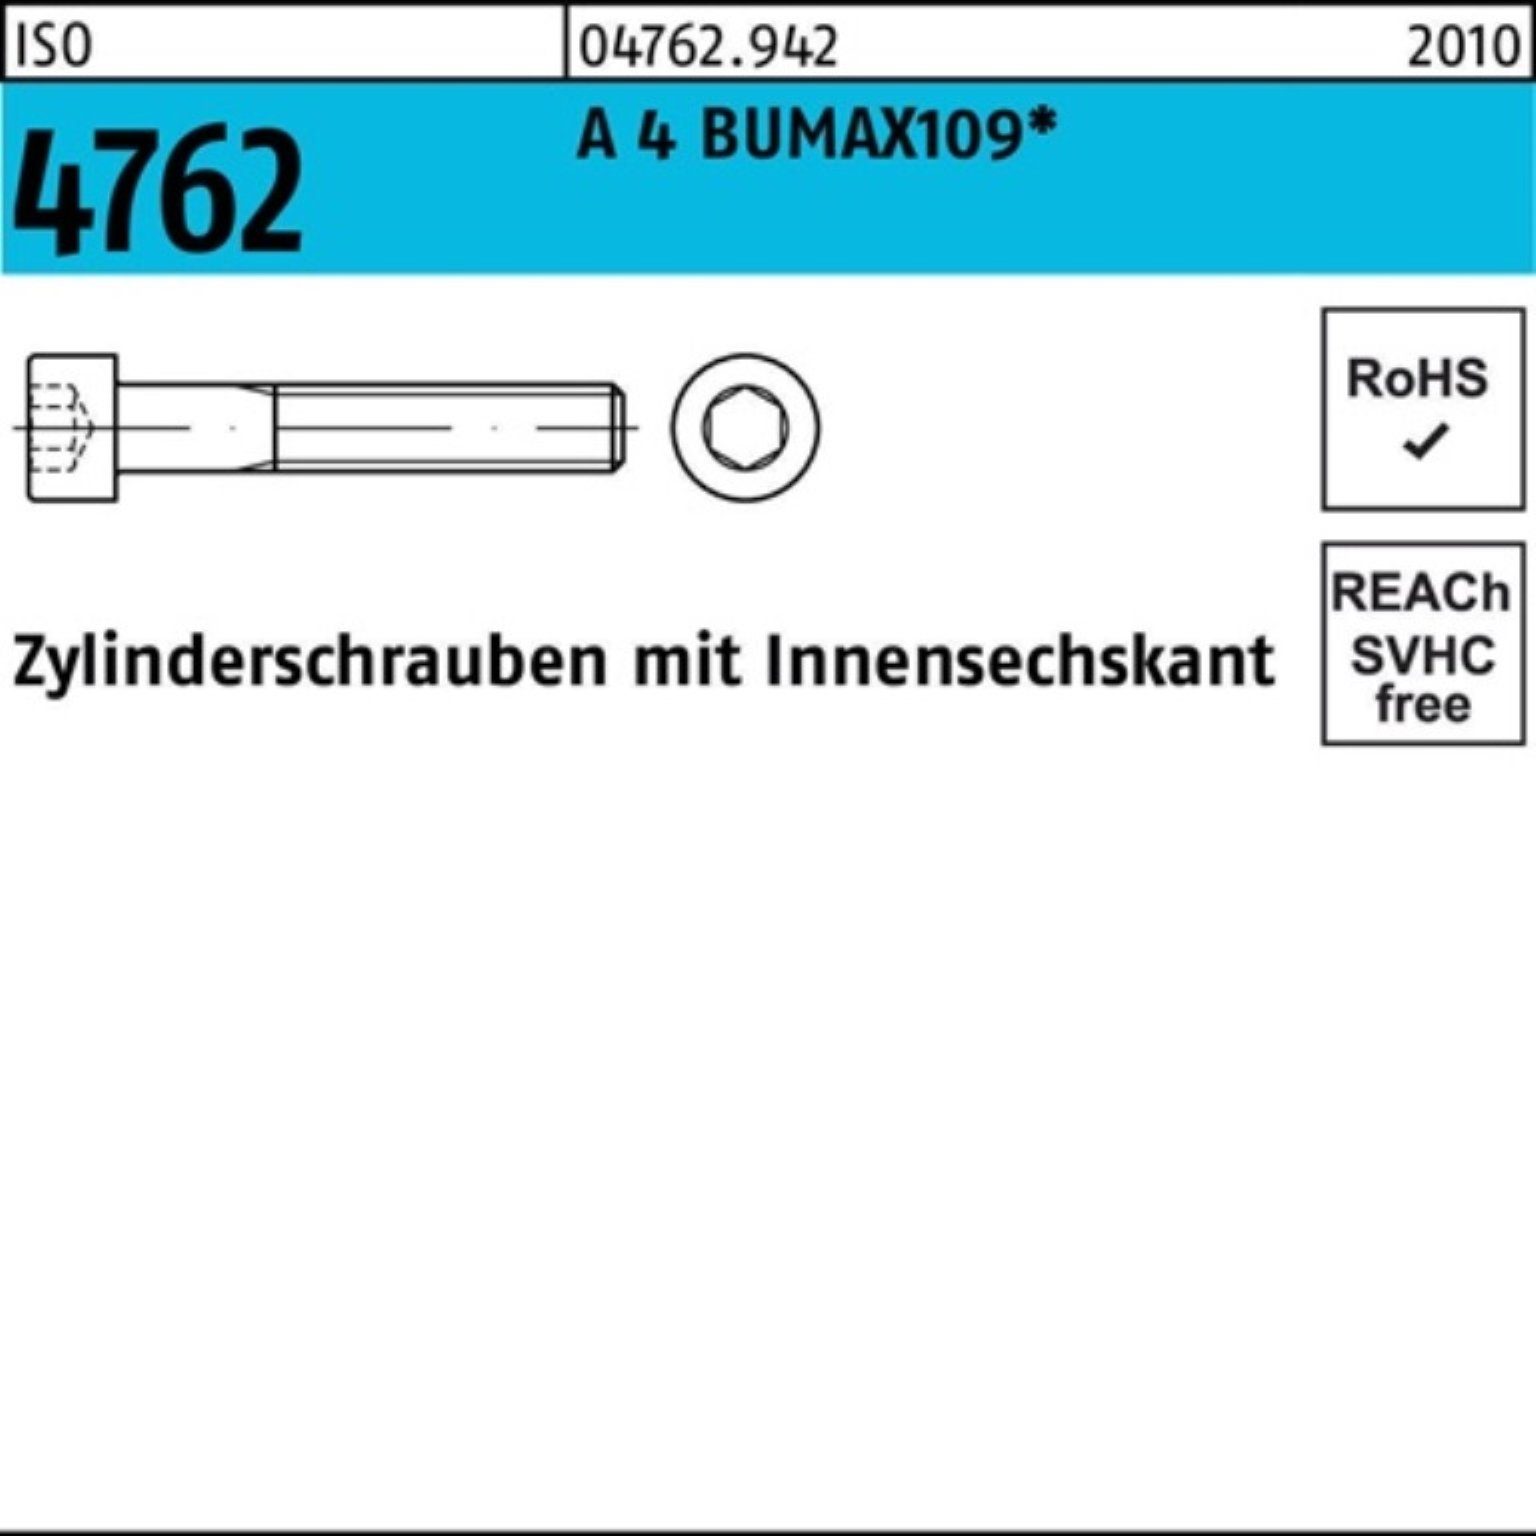 Bufab Zylinderschraube 100er Pack Zylinderschraube ISO 4762 Innen-6kt M12x 50 A 4 BUMAX109 25